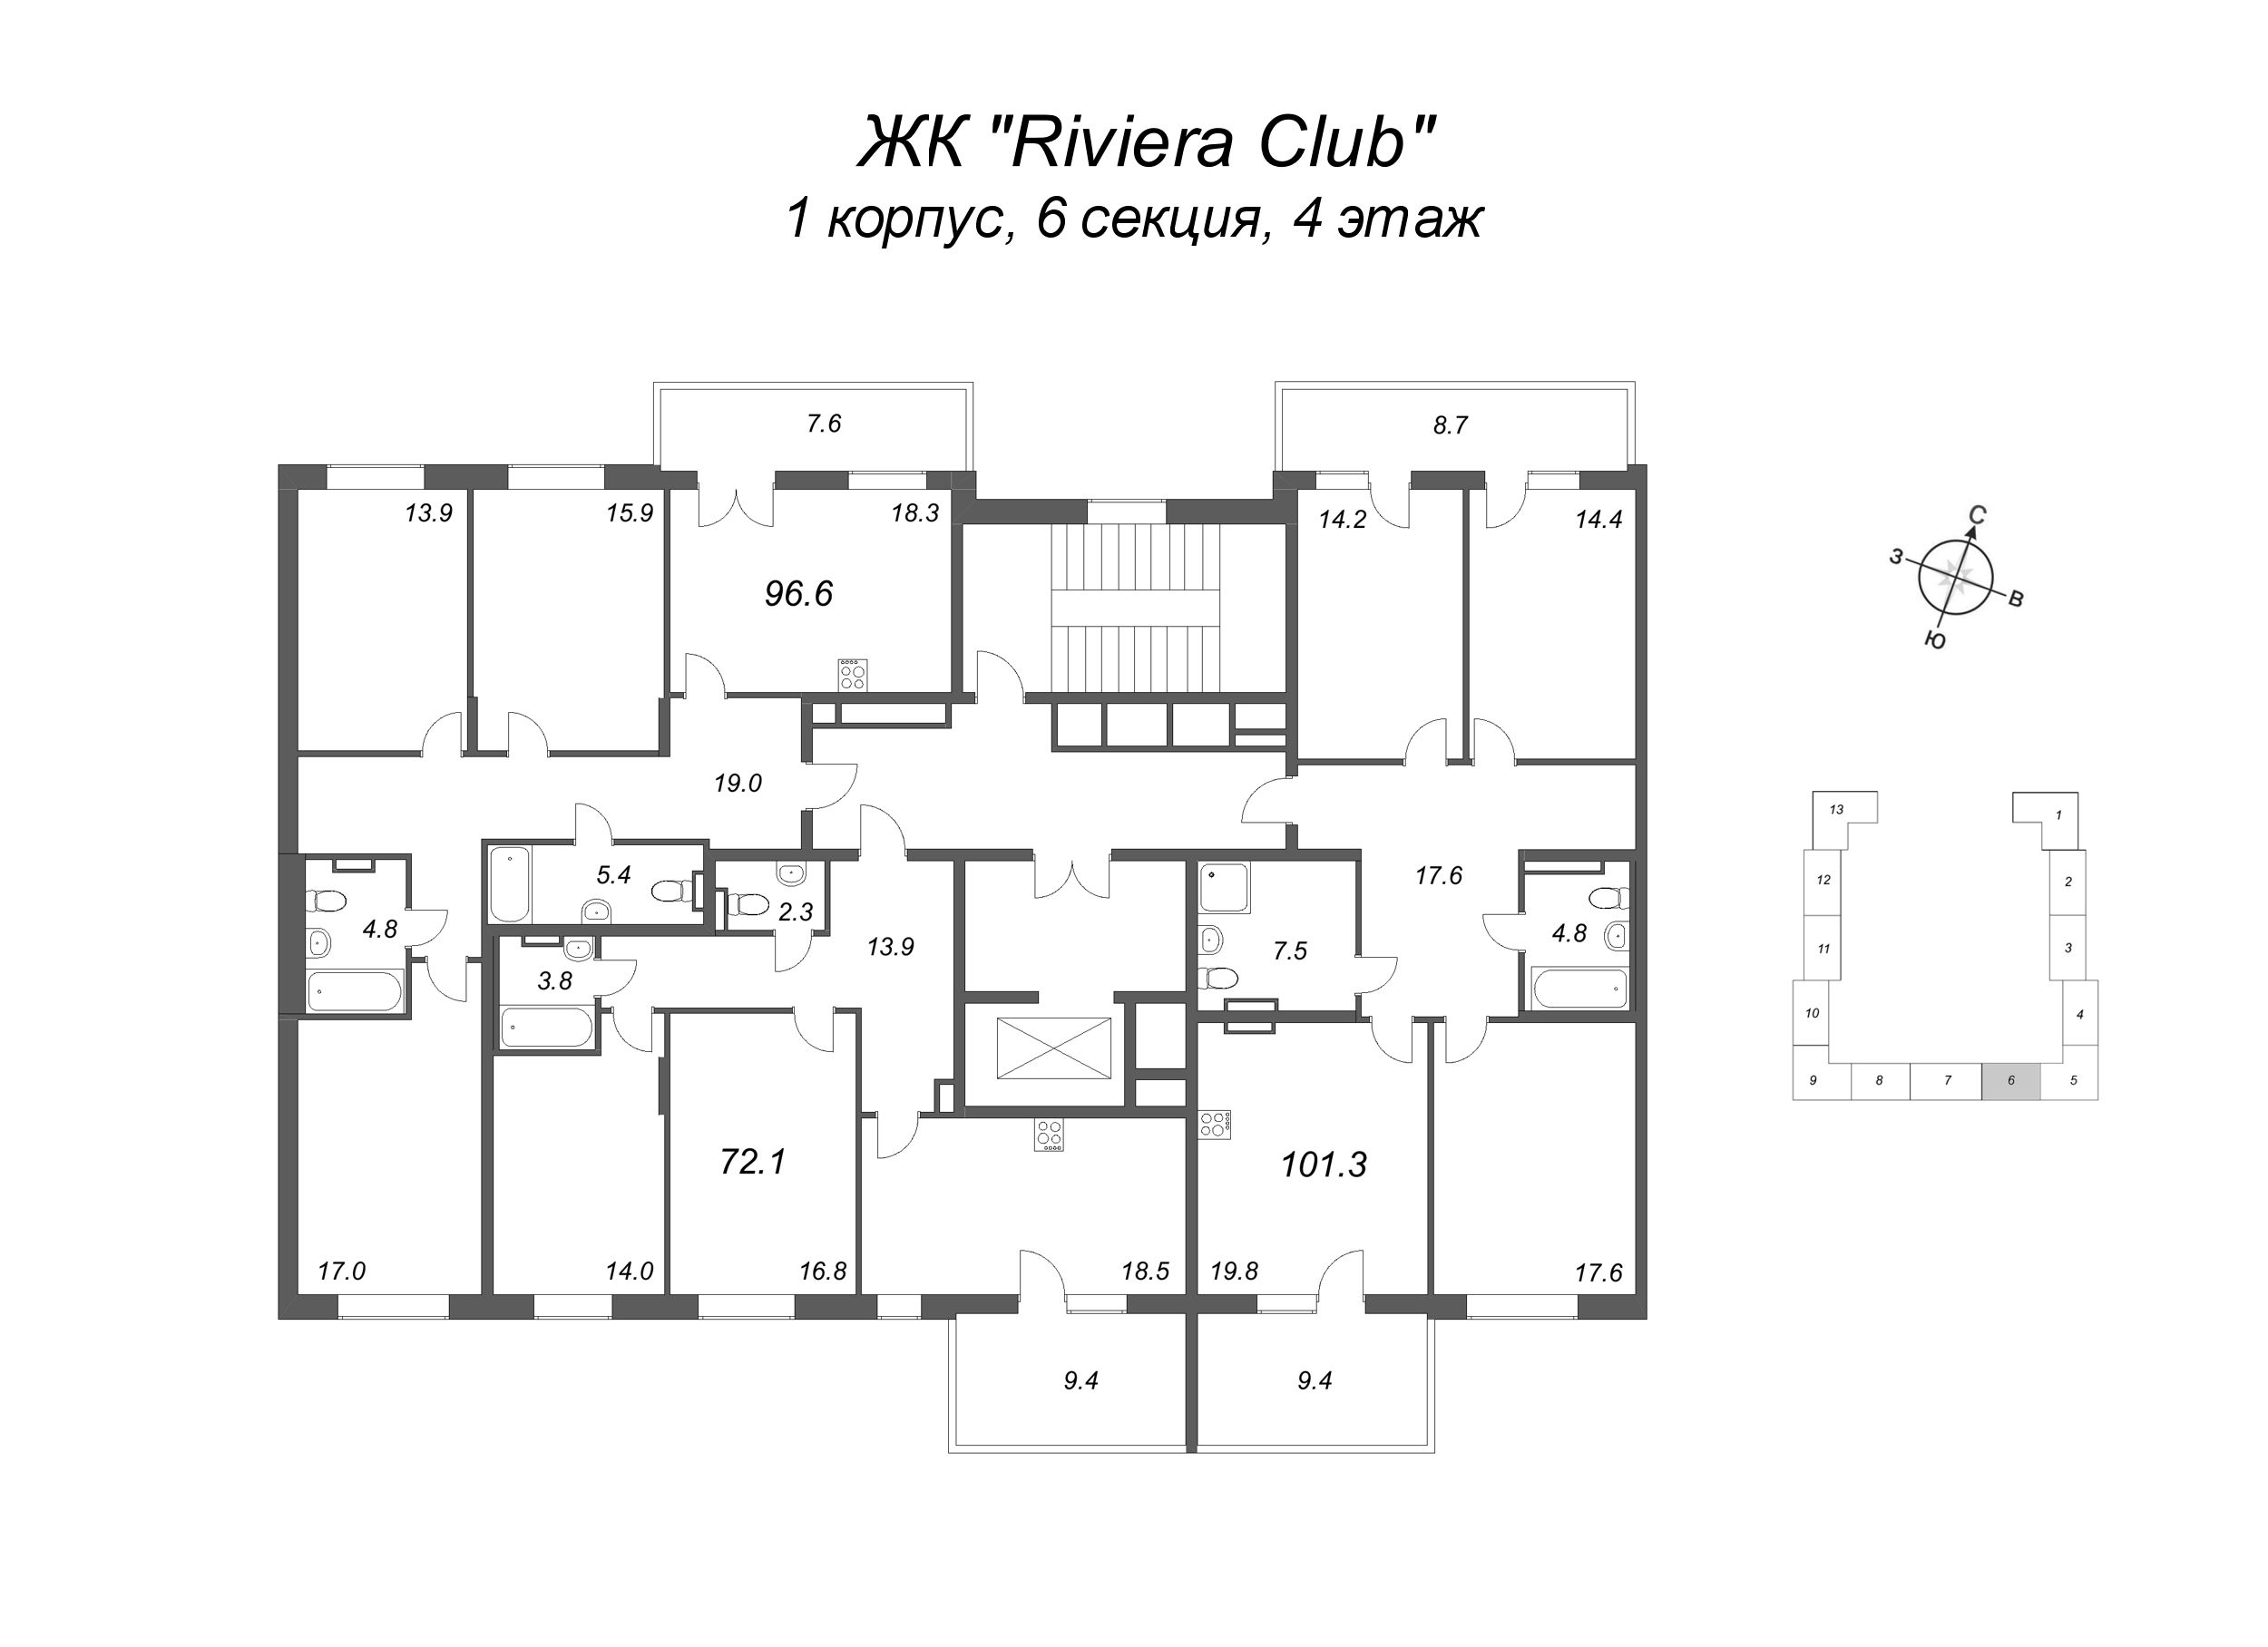 4-комнатная (Евро) квартира, 96.6 м² в ЖК "Riviera Club" - планировка этажа